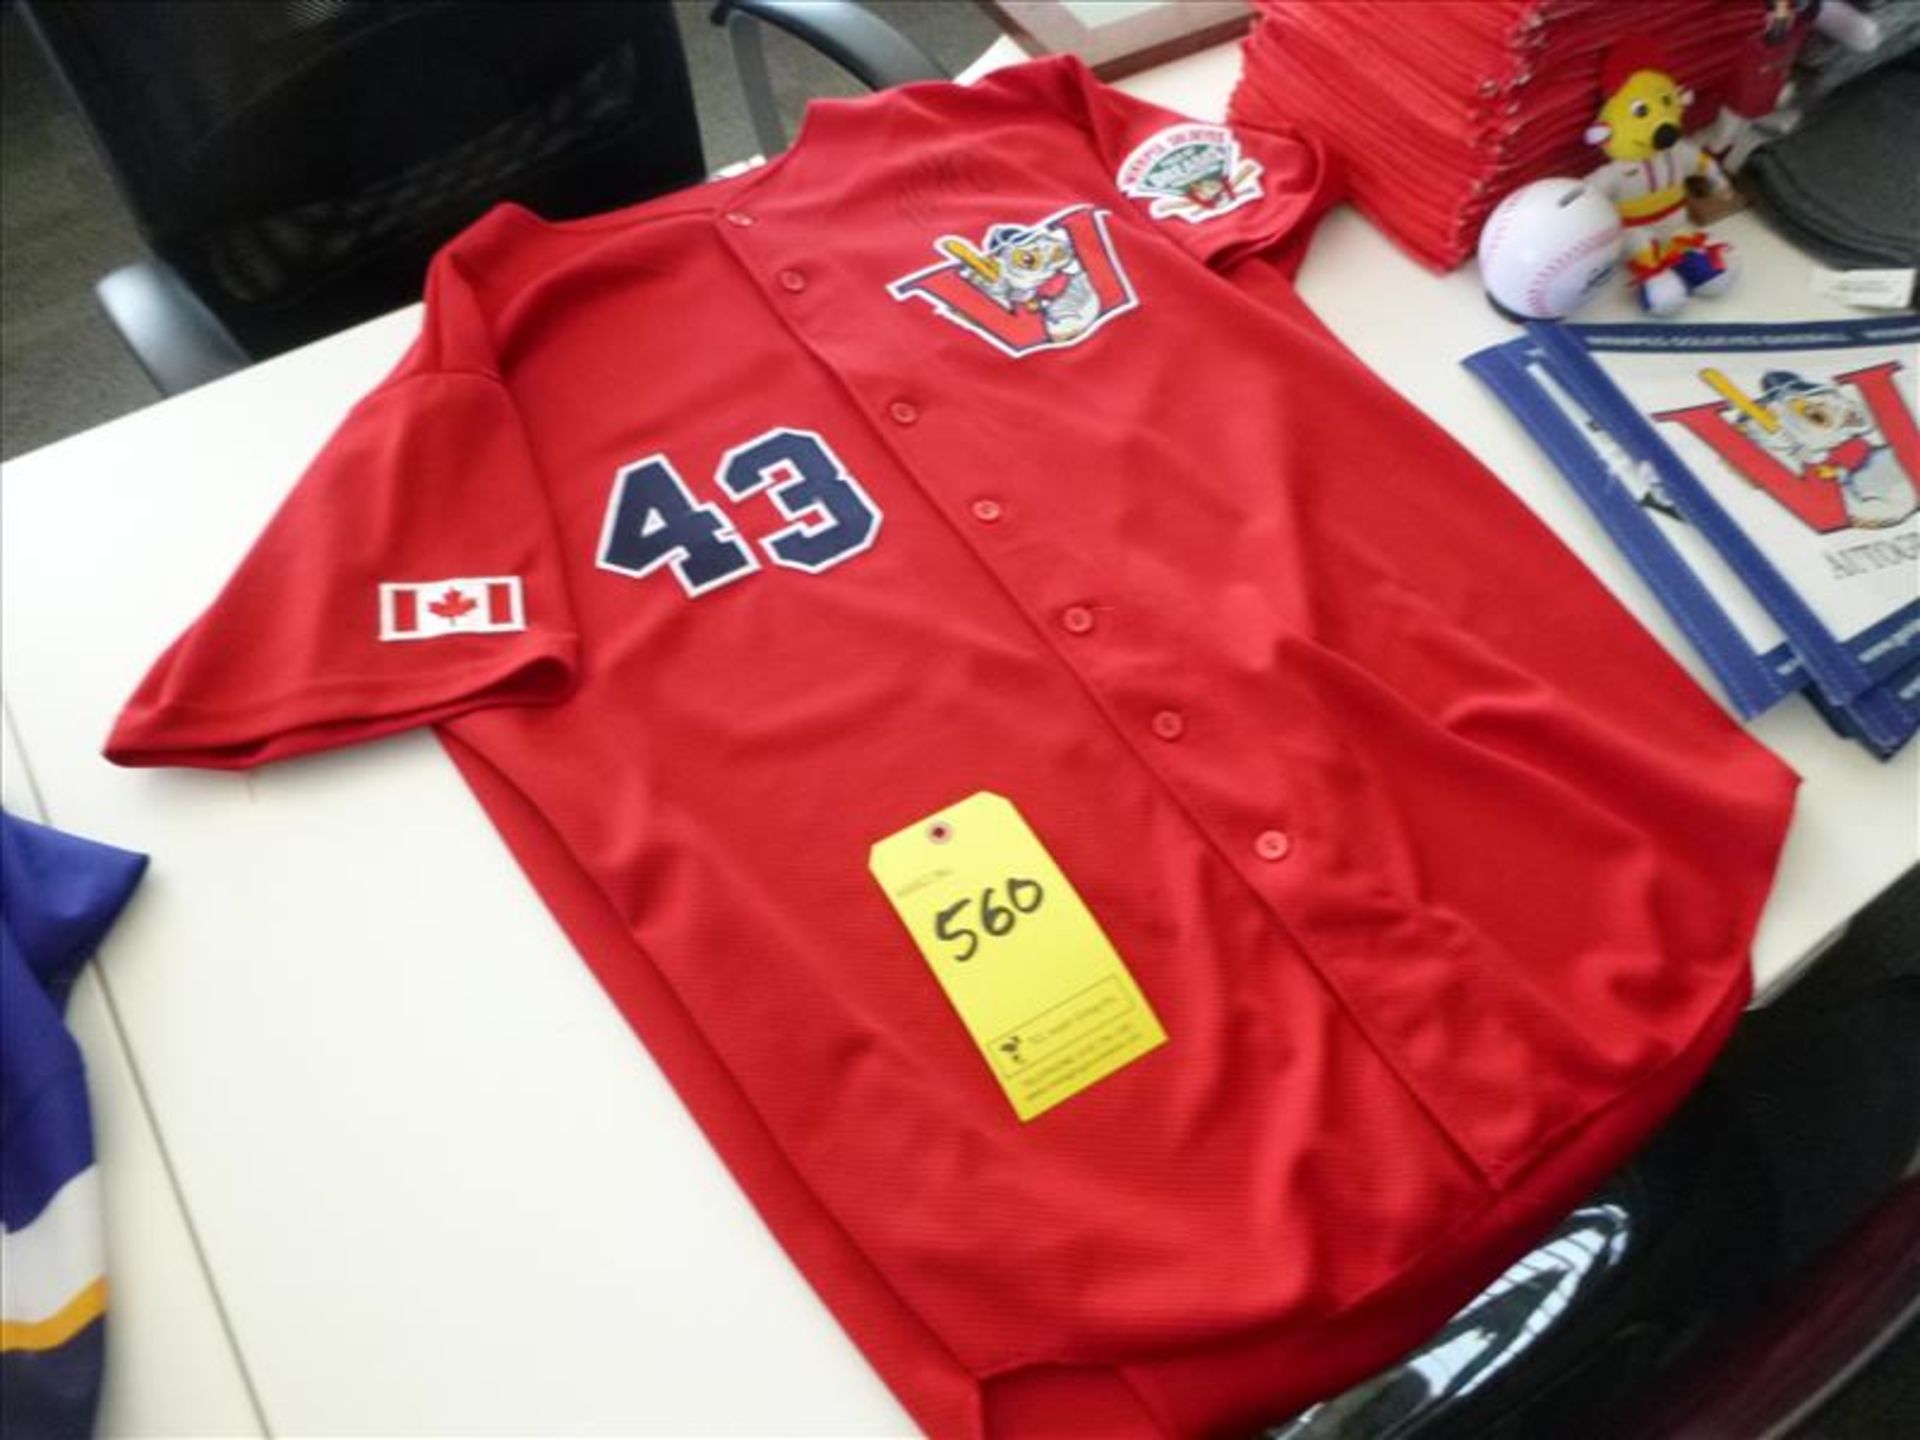 Winnipeg GoldEyes jersey, no. 43 c/w misc. paraphernalia